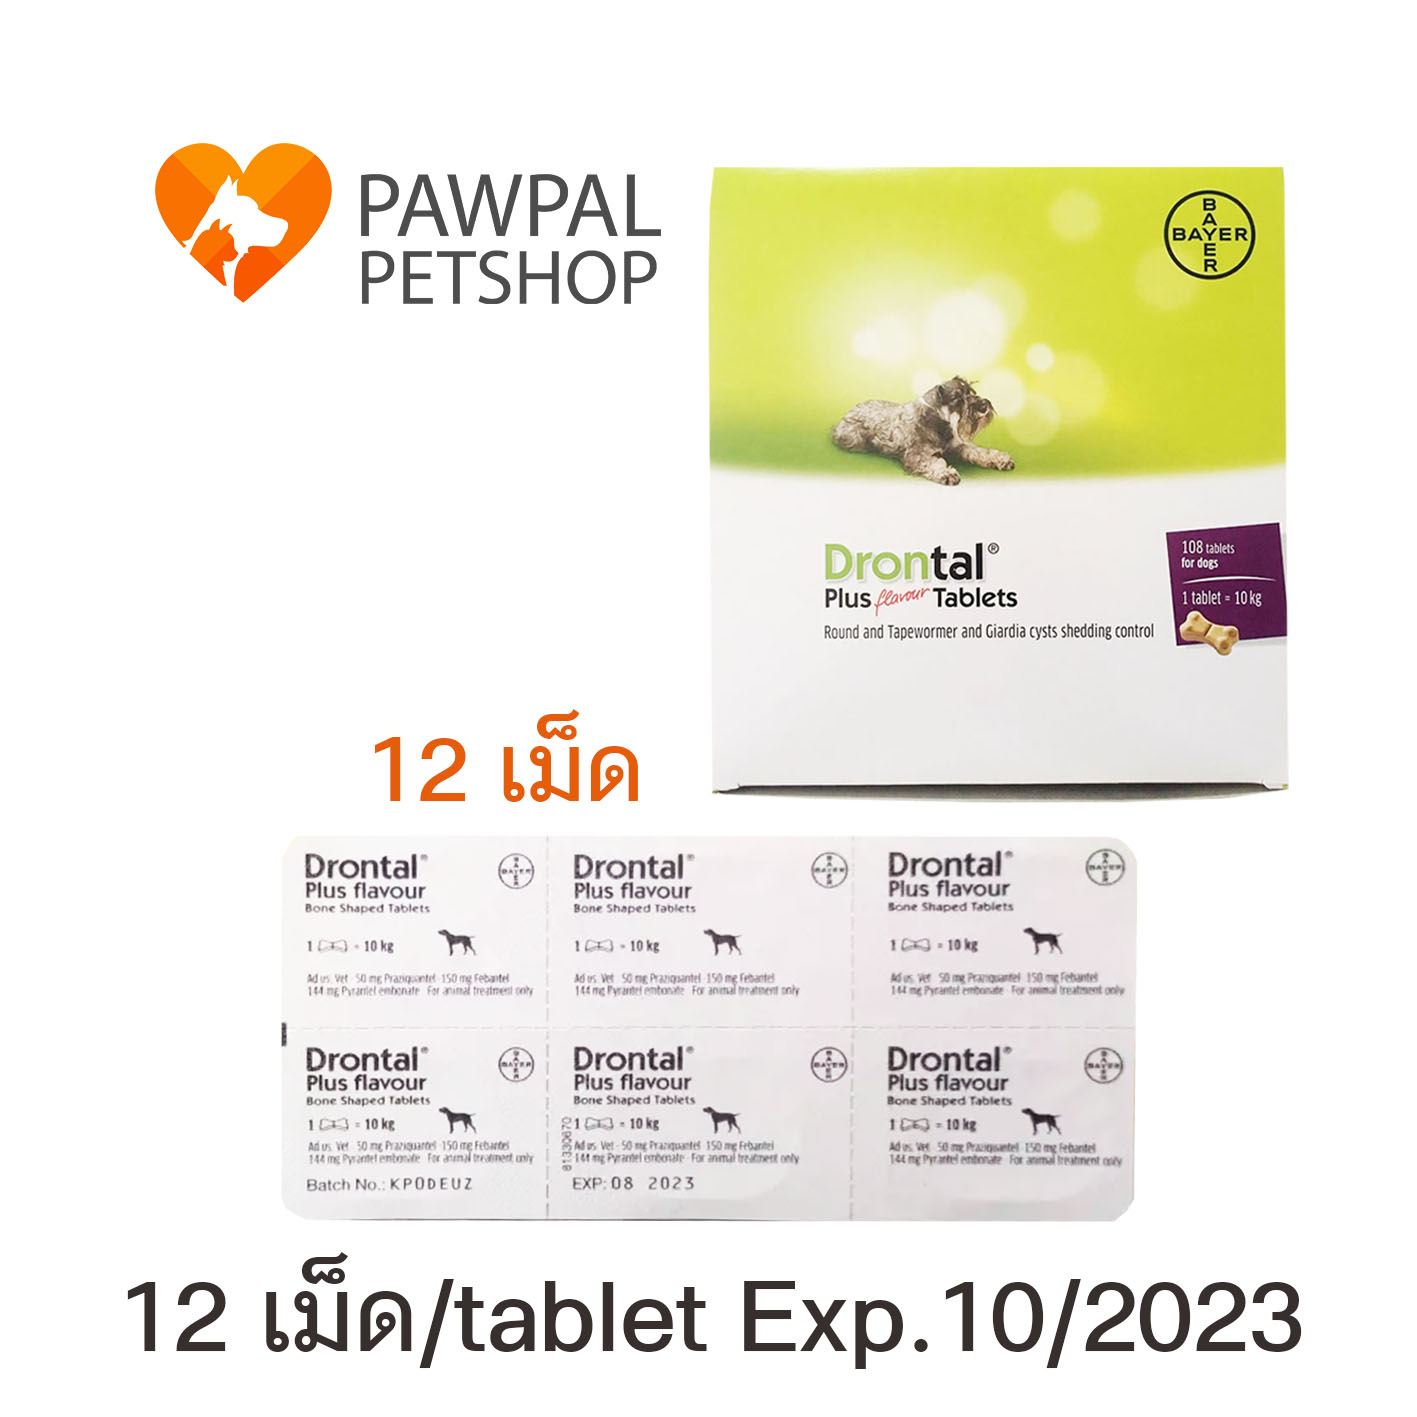 Drontal Plus Bayer ดรอนทัล พลัส Exp.10/2023 สำหรับ สุนัข รสเนื้อ รูปกระดูก tablet for dog (12 เม็ด/tablets)